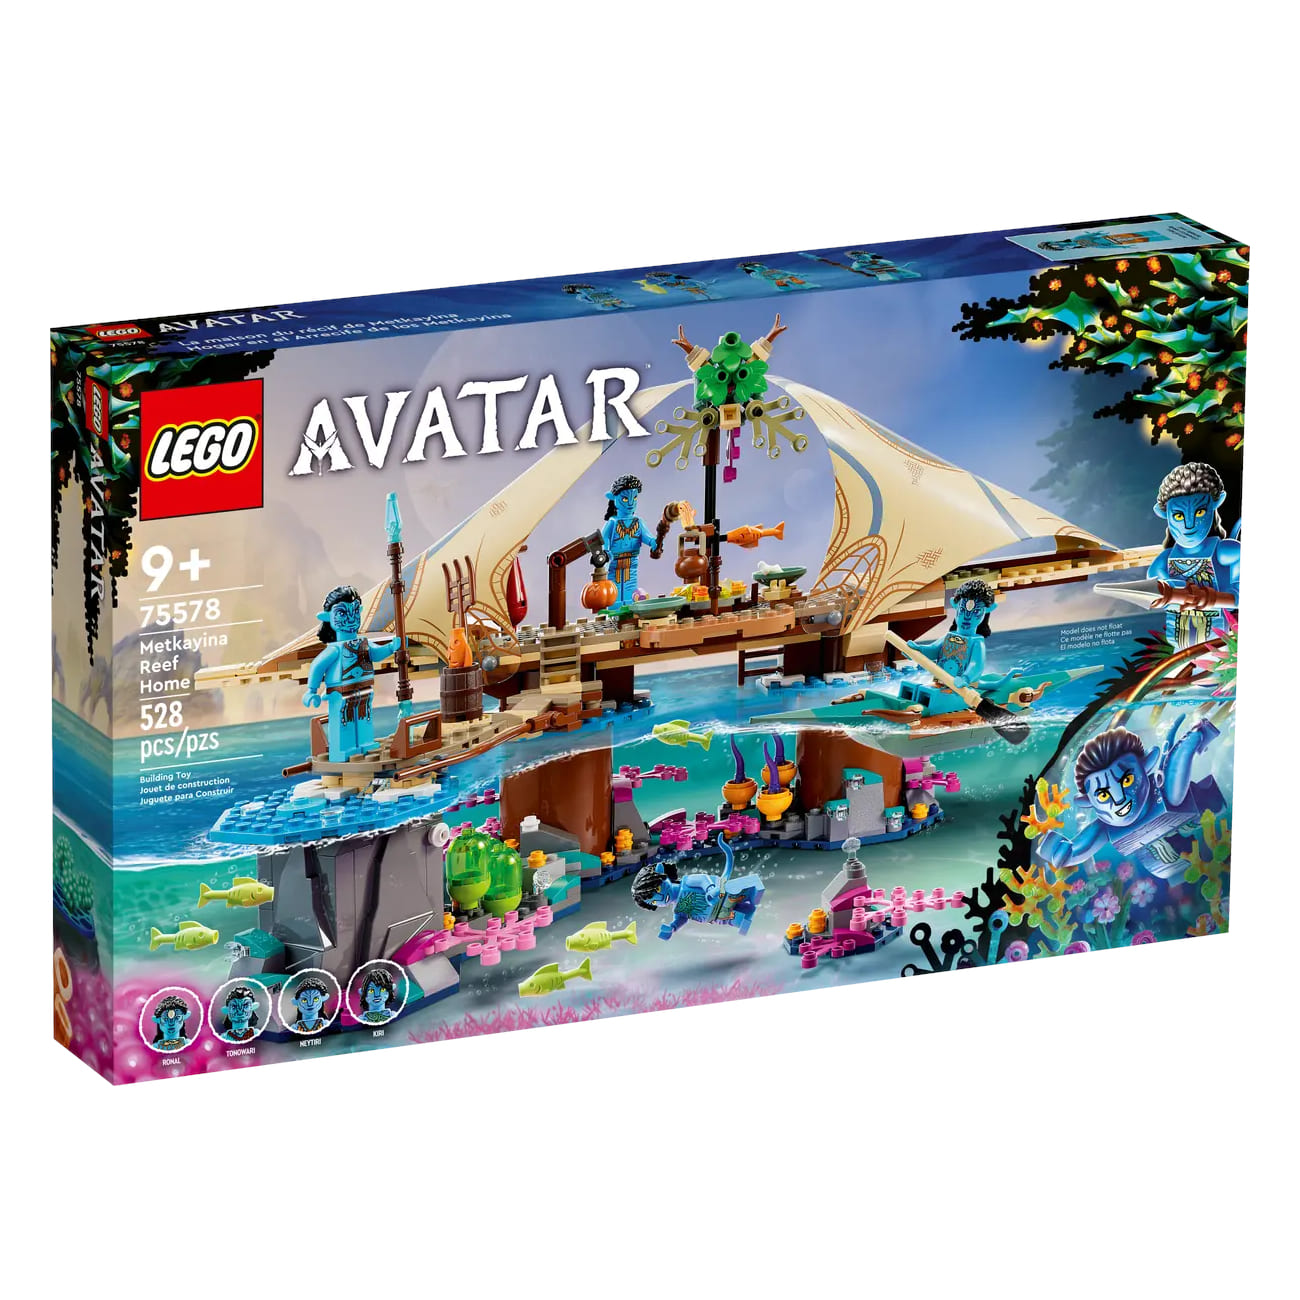 Конструктор LEGO Avatar Metkayina Reef Home 75578, 528 деталей конструктор avatar дом меткайина на рифе